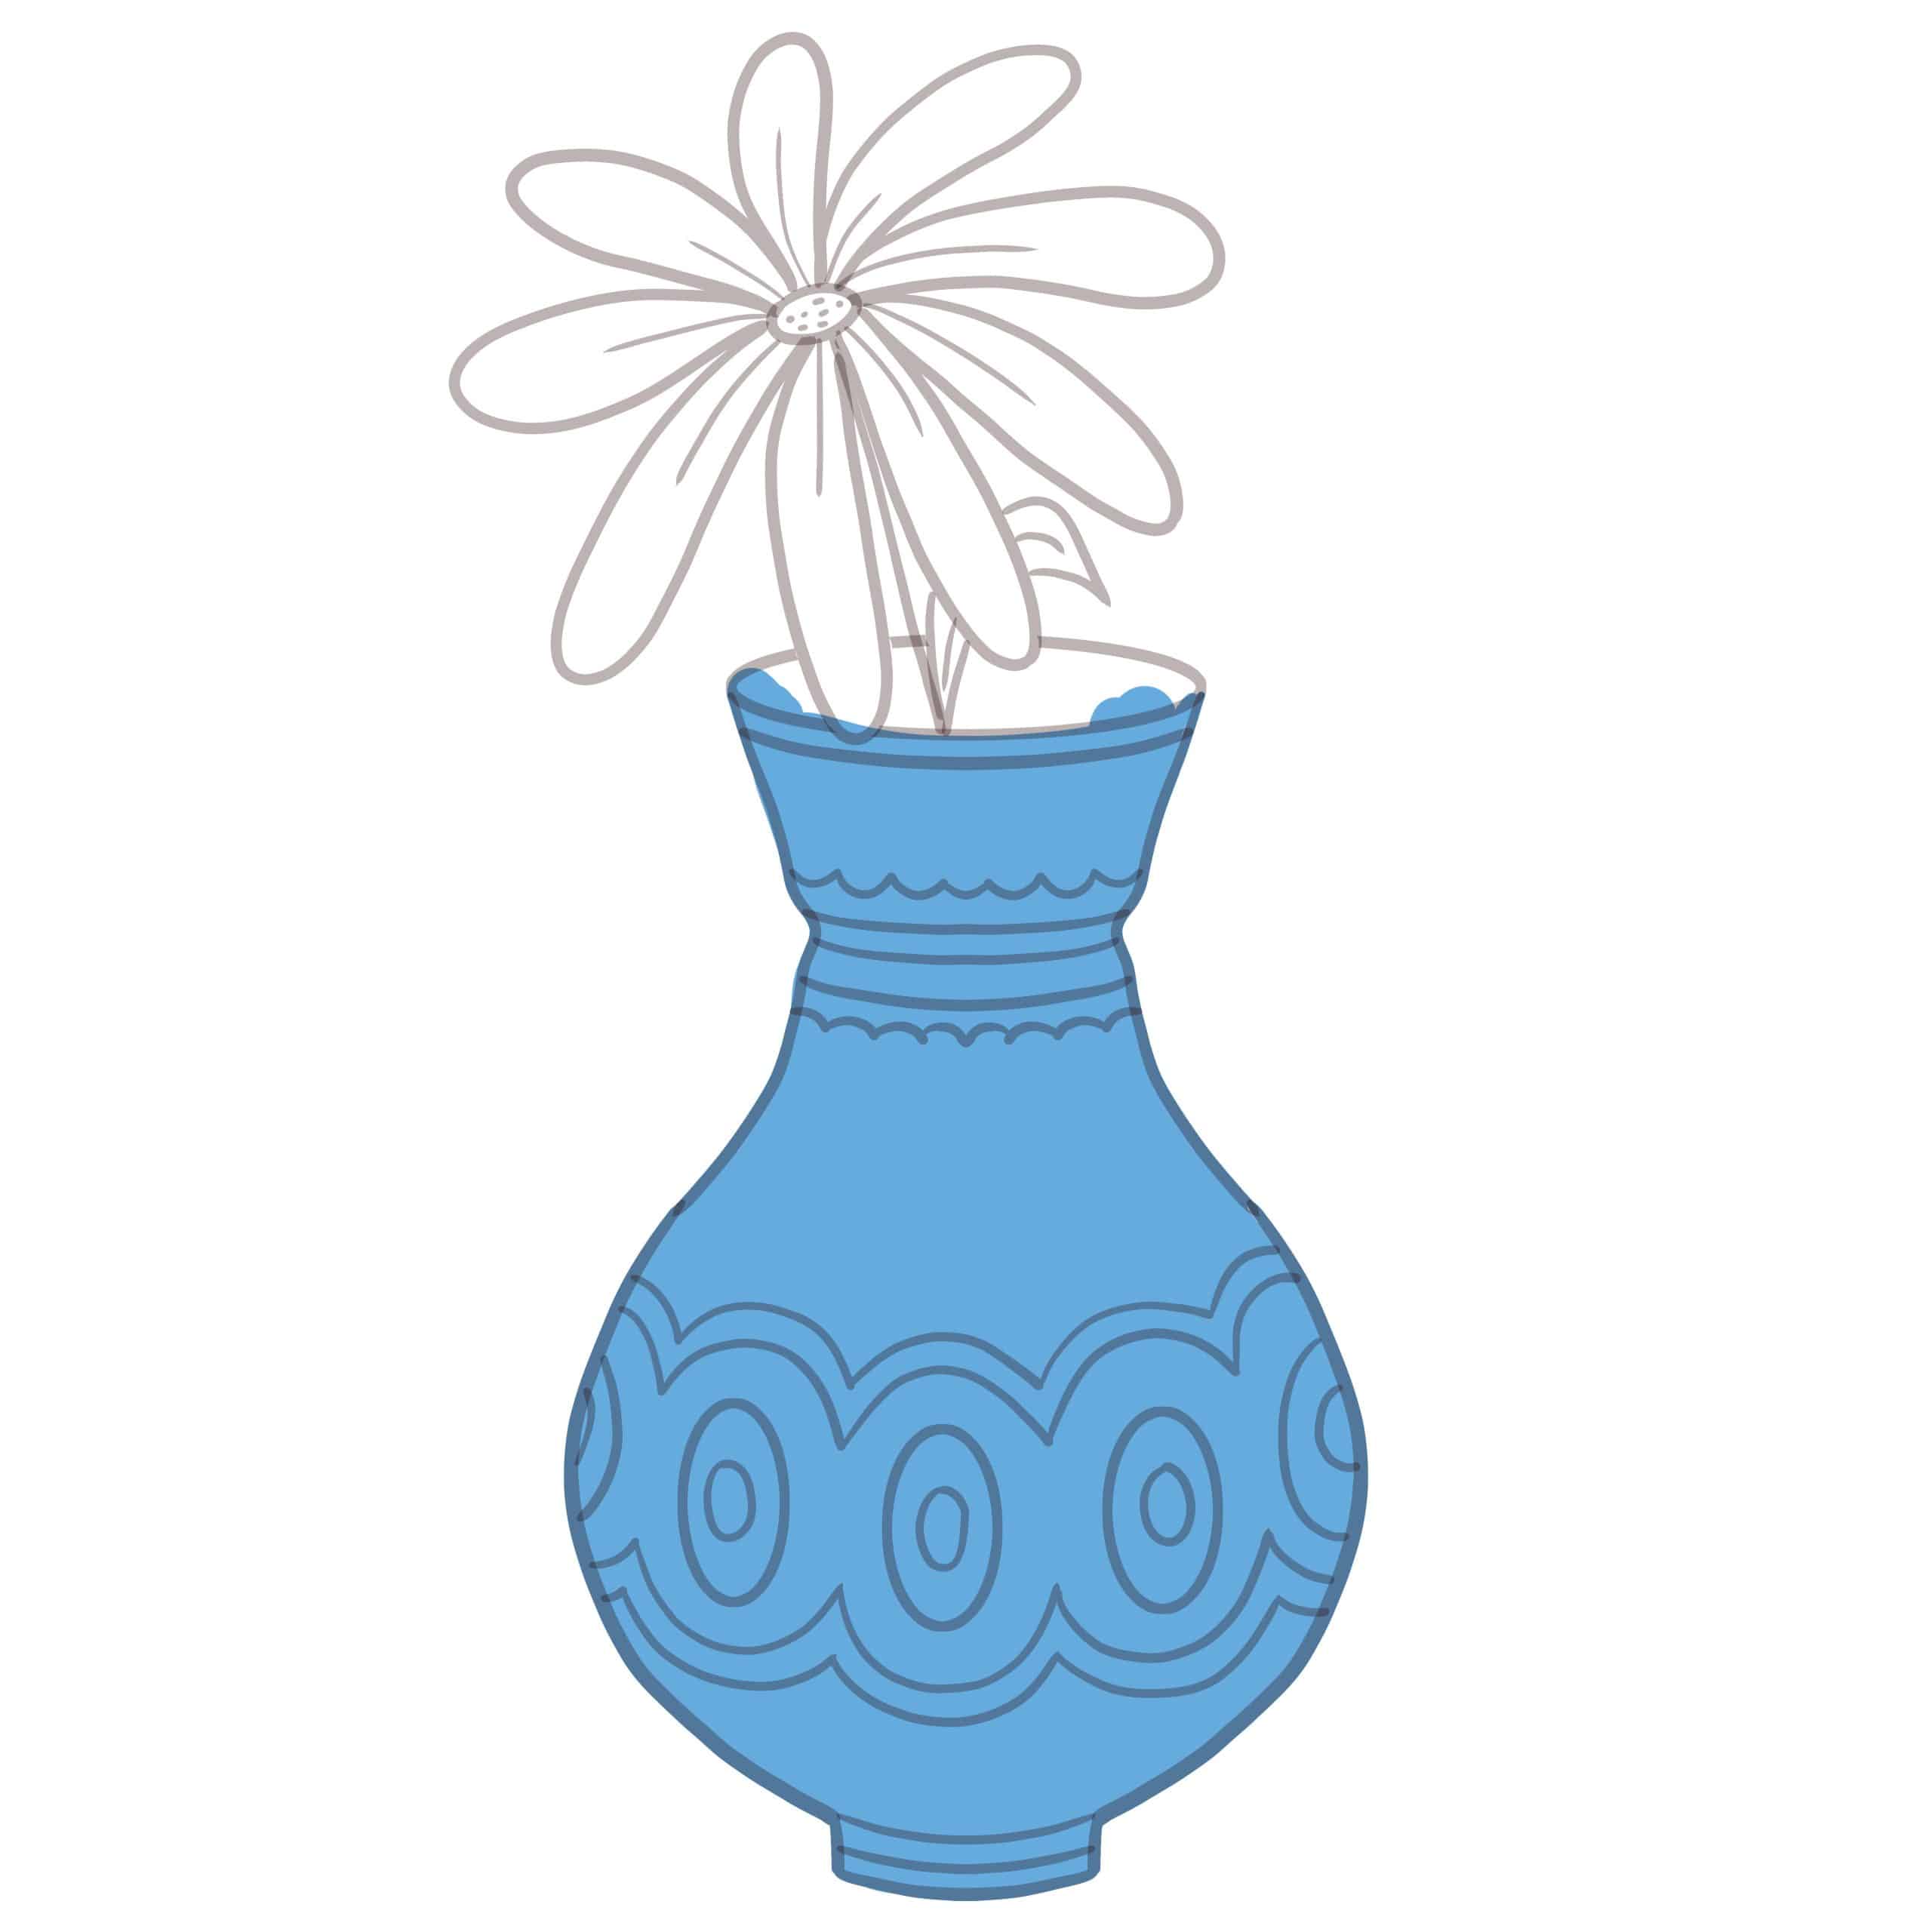 Vase Drawing Images - Free Download on Freepik-saigonsouth.com.vn